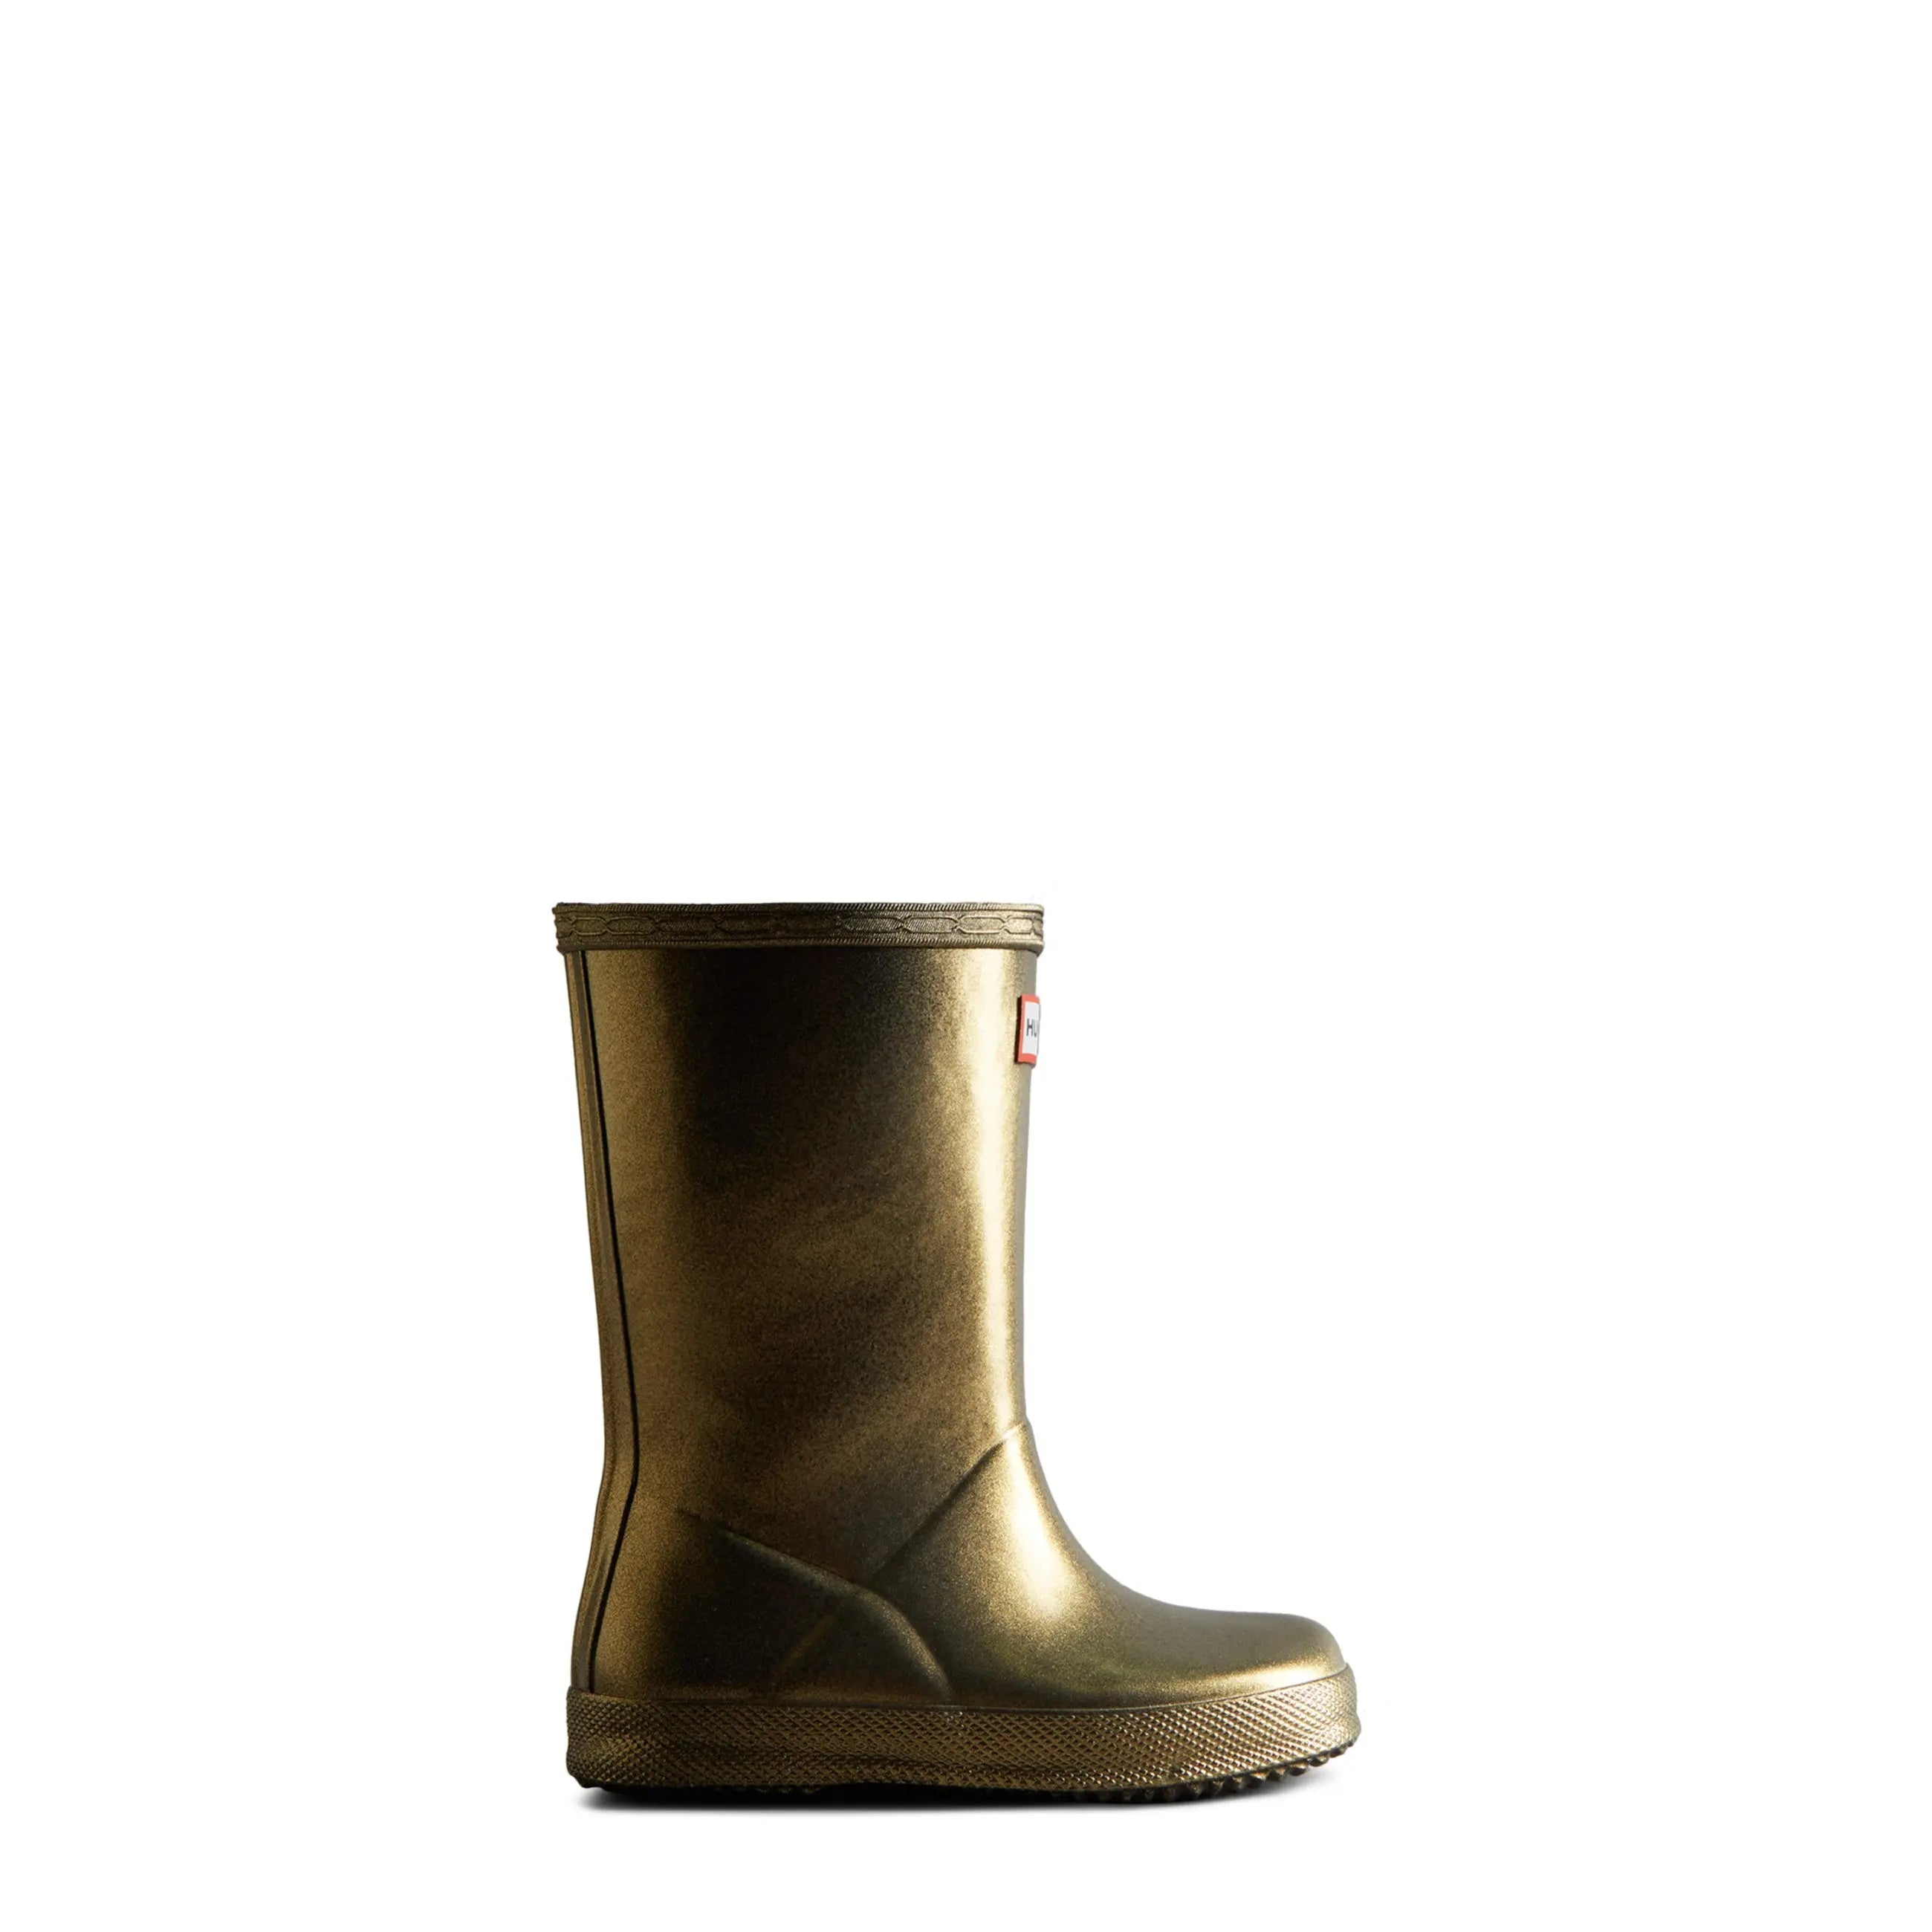 Kids First Nebula Rain Boots - Hunter Boots Kids First Nebula Rain Boots Gold Hunter Boots Kids First > Rain Boots > Kids First Rain Boots